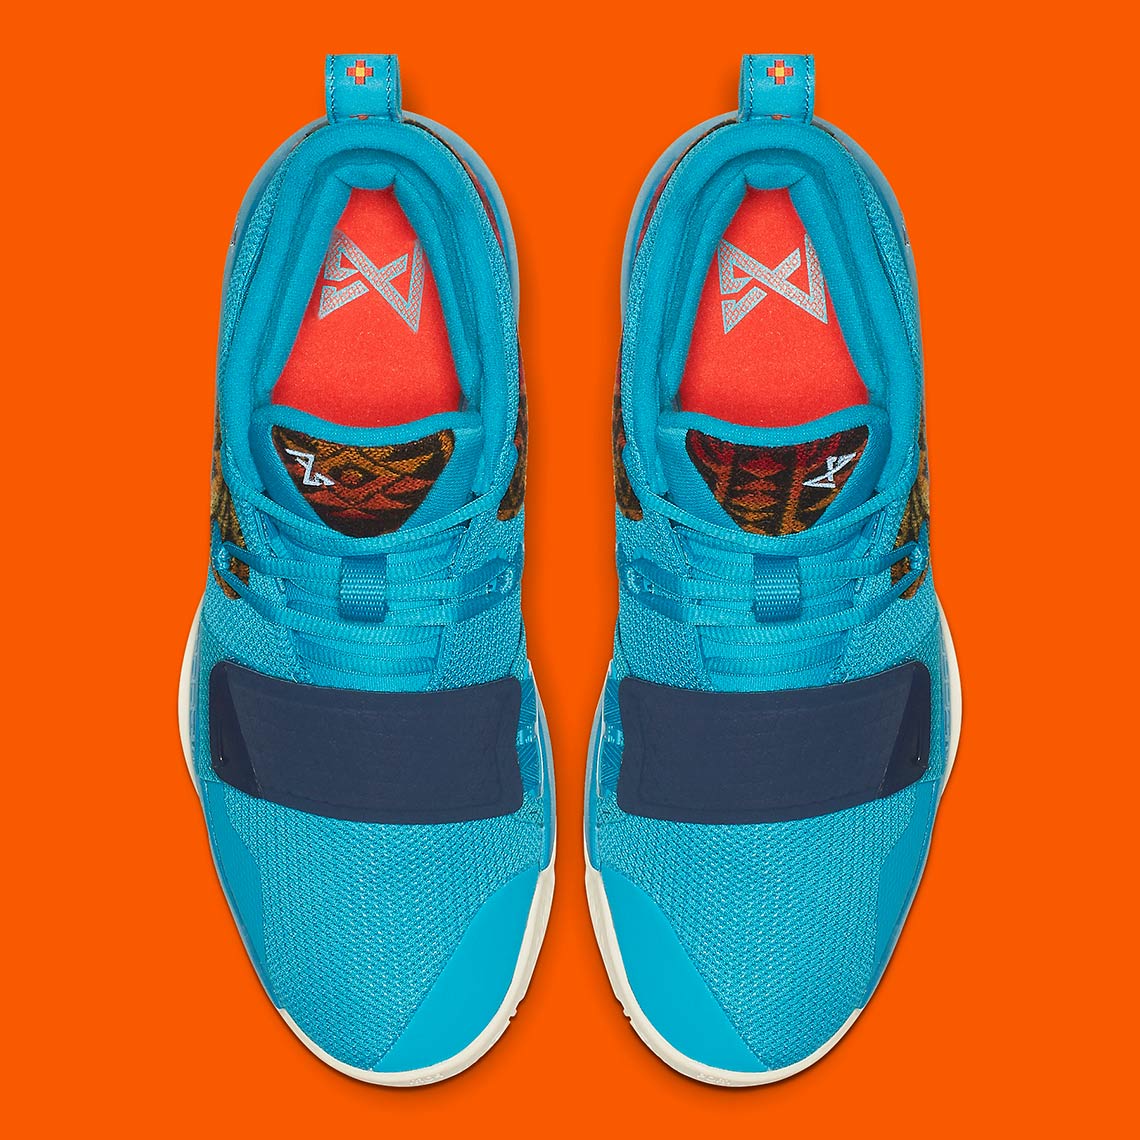 Nike PG 2.5 Pendleton First Look + Release Info | NBAMeme.com